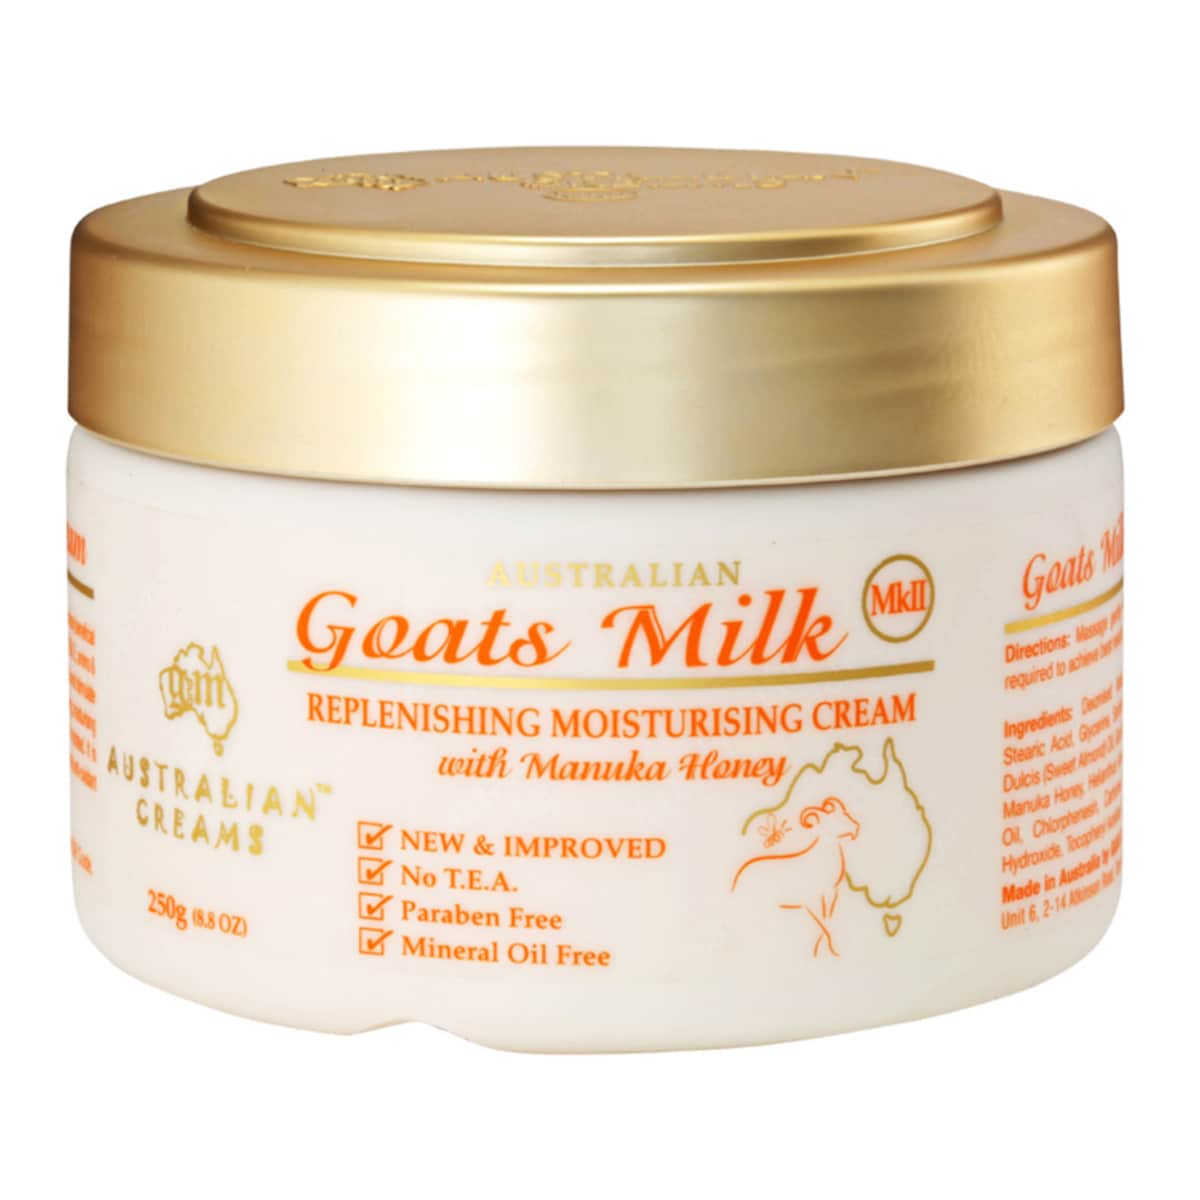 Australian Creams MKII Goats Milk Moisturising Cream with Manuka Honey 250g